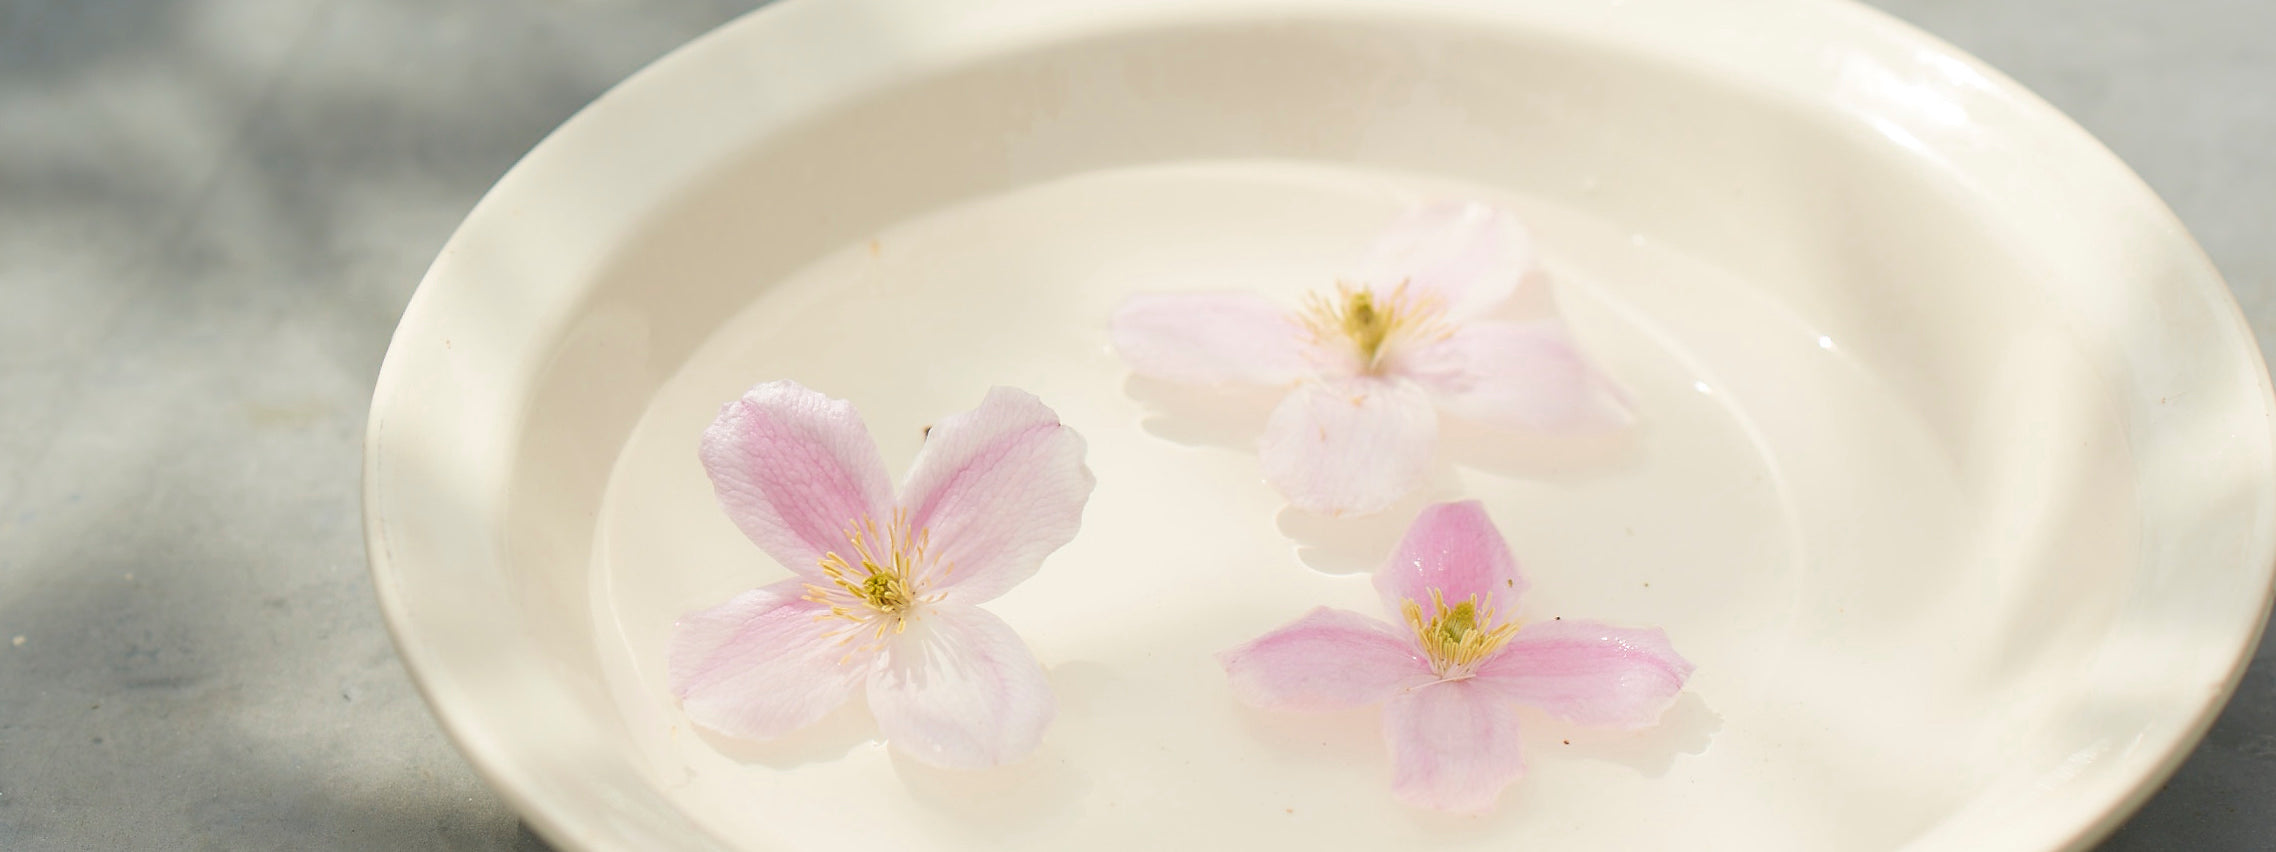 Cherry Blossom Flower Essence for Optimism and Potential – Medusa Gothic